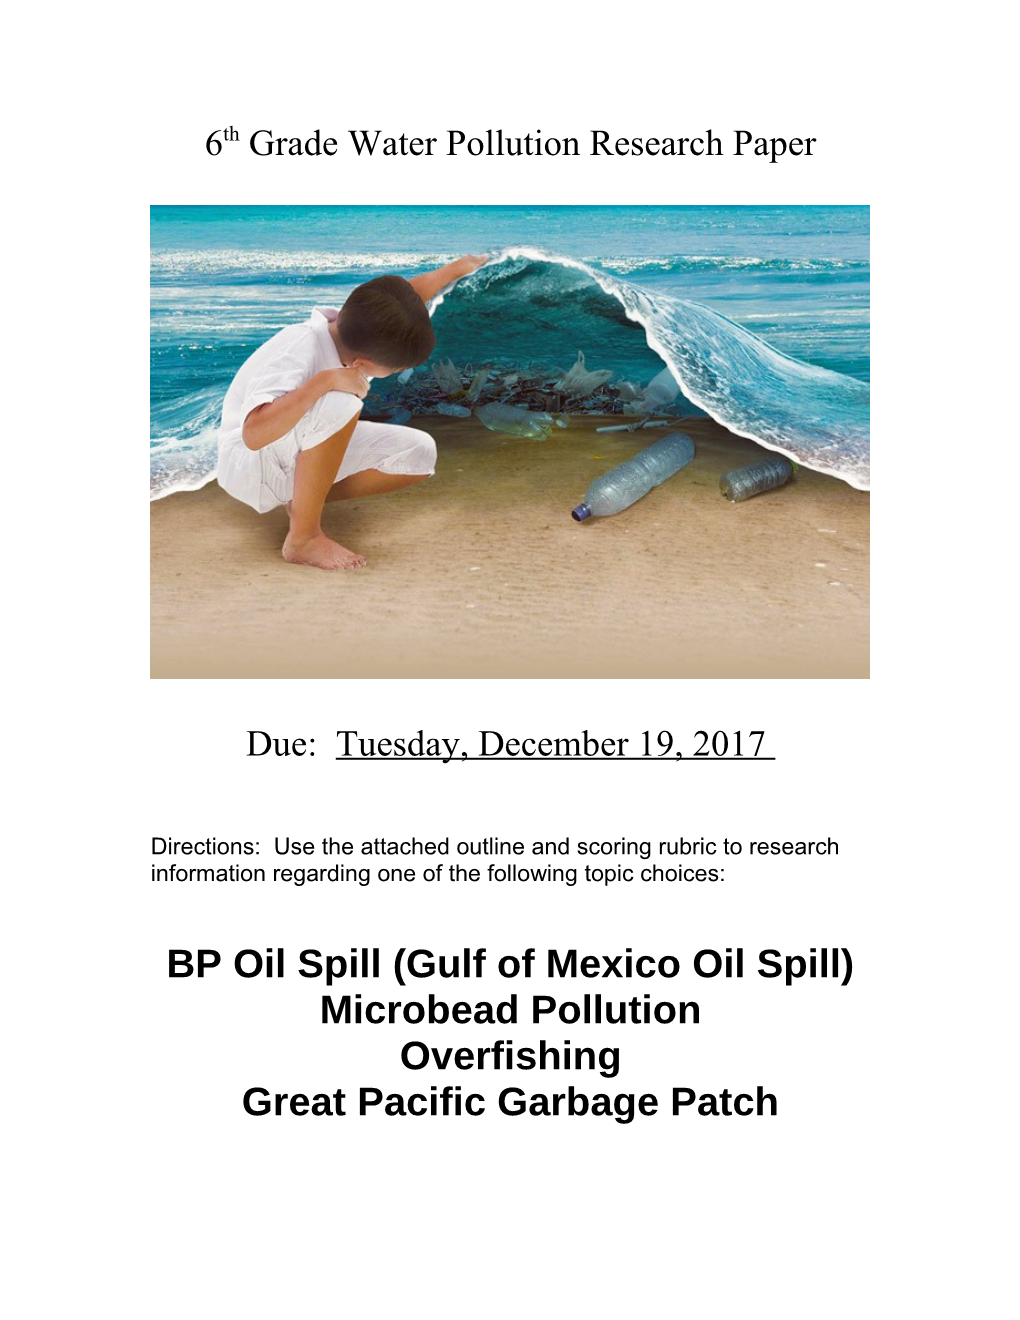 BP Oil Spill (Gulf of Mexico Oil Spill)